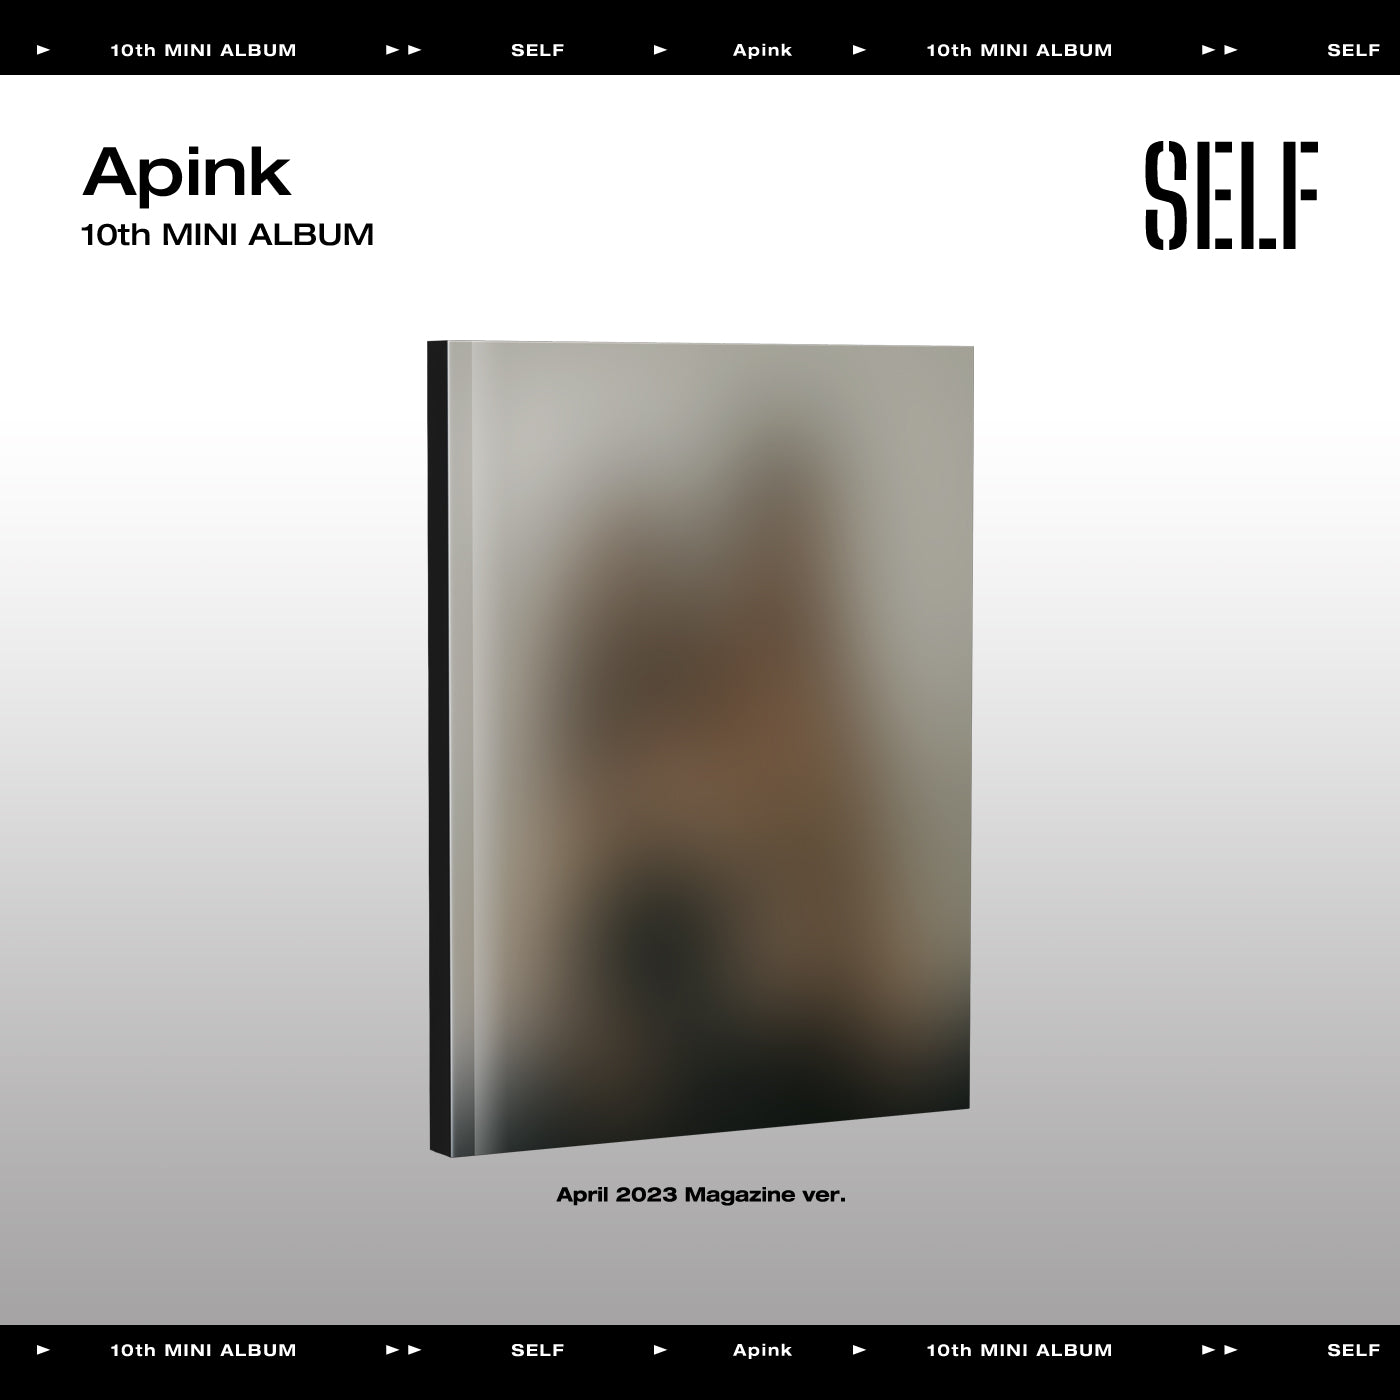 Apink - SELF (April 2023 Magazine Ver.)